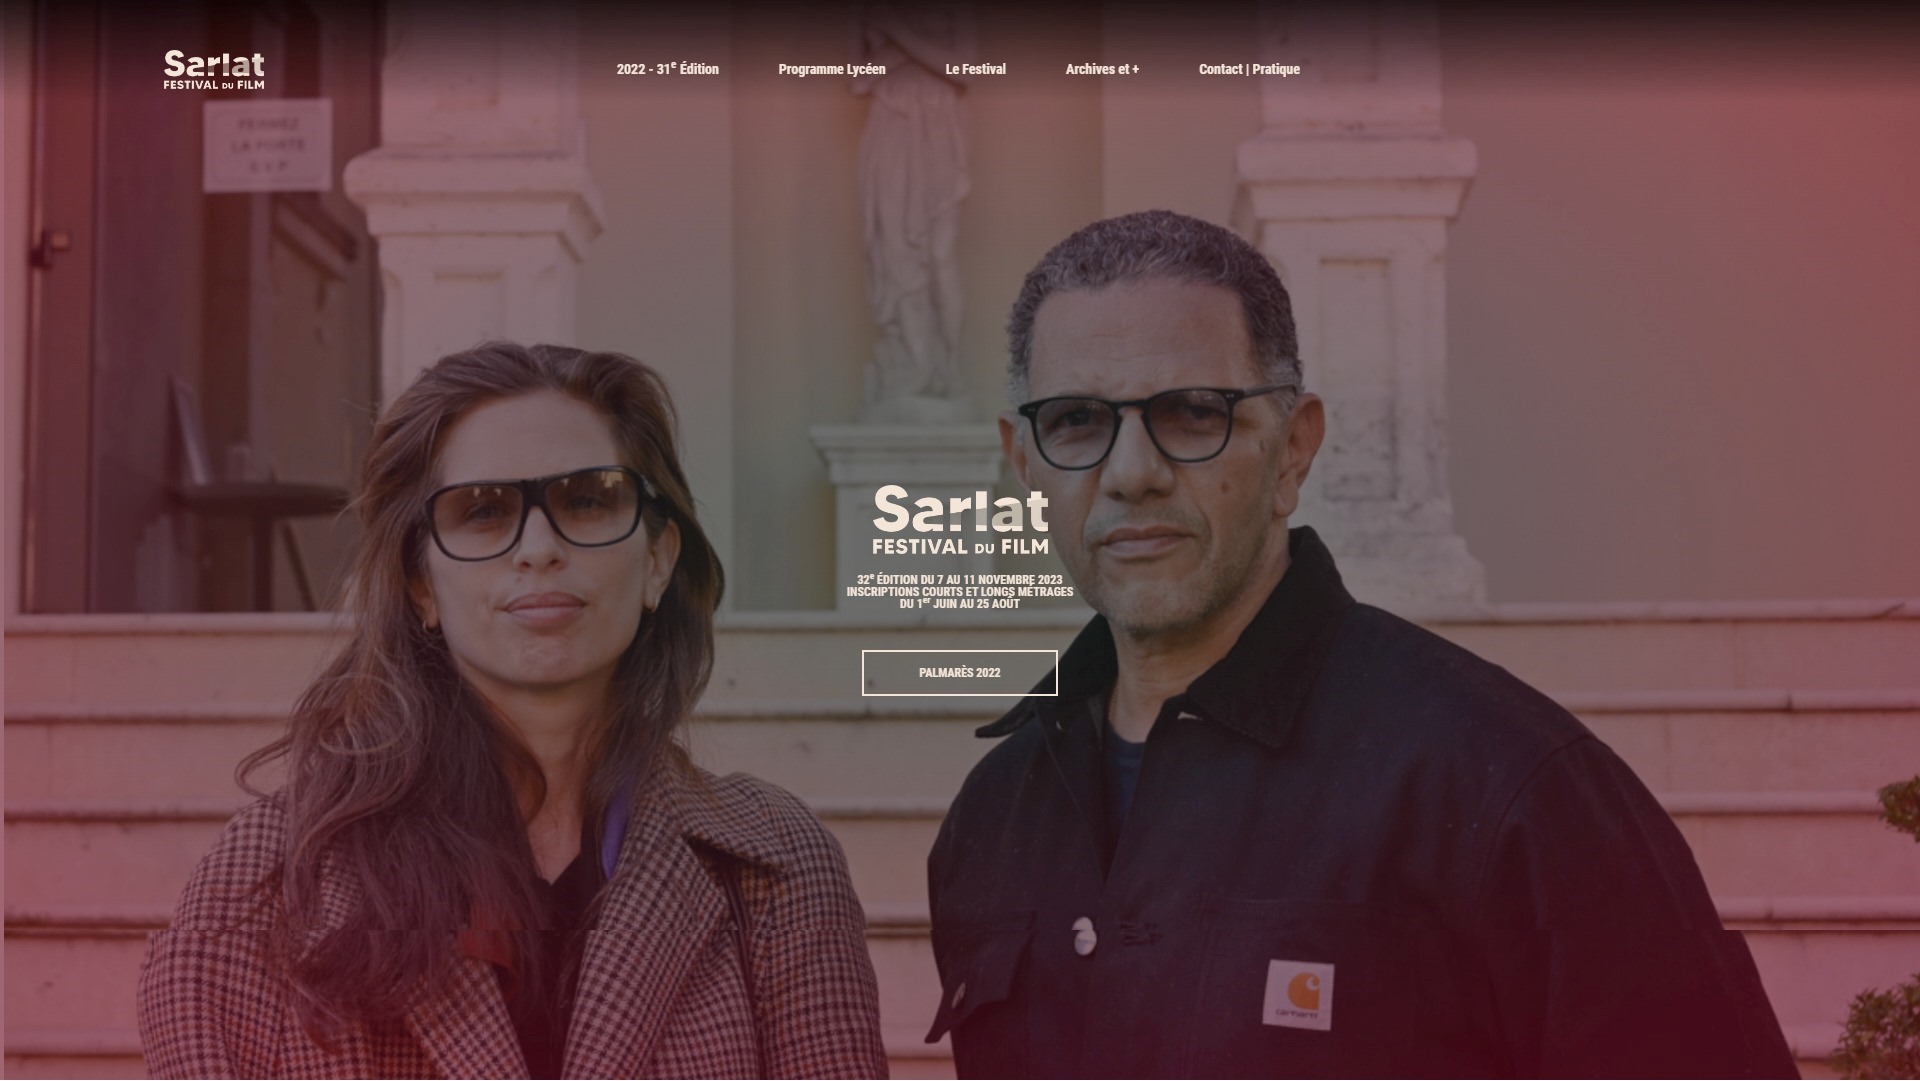 alioki agence communication sarlat dordogne creation site internet webmaster festival film sarlat home